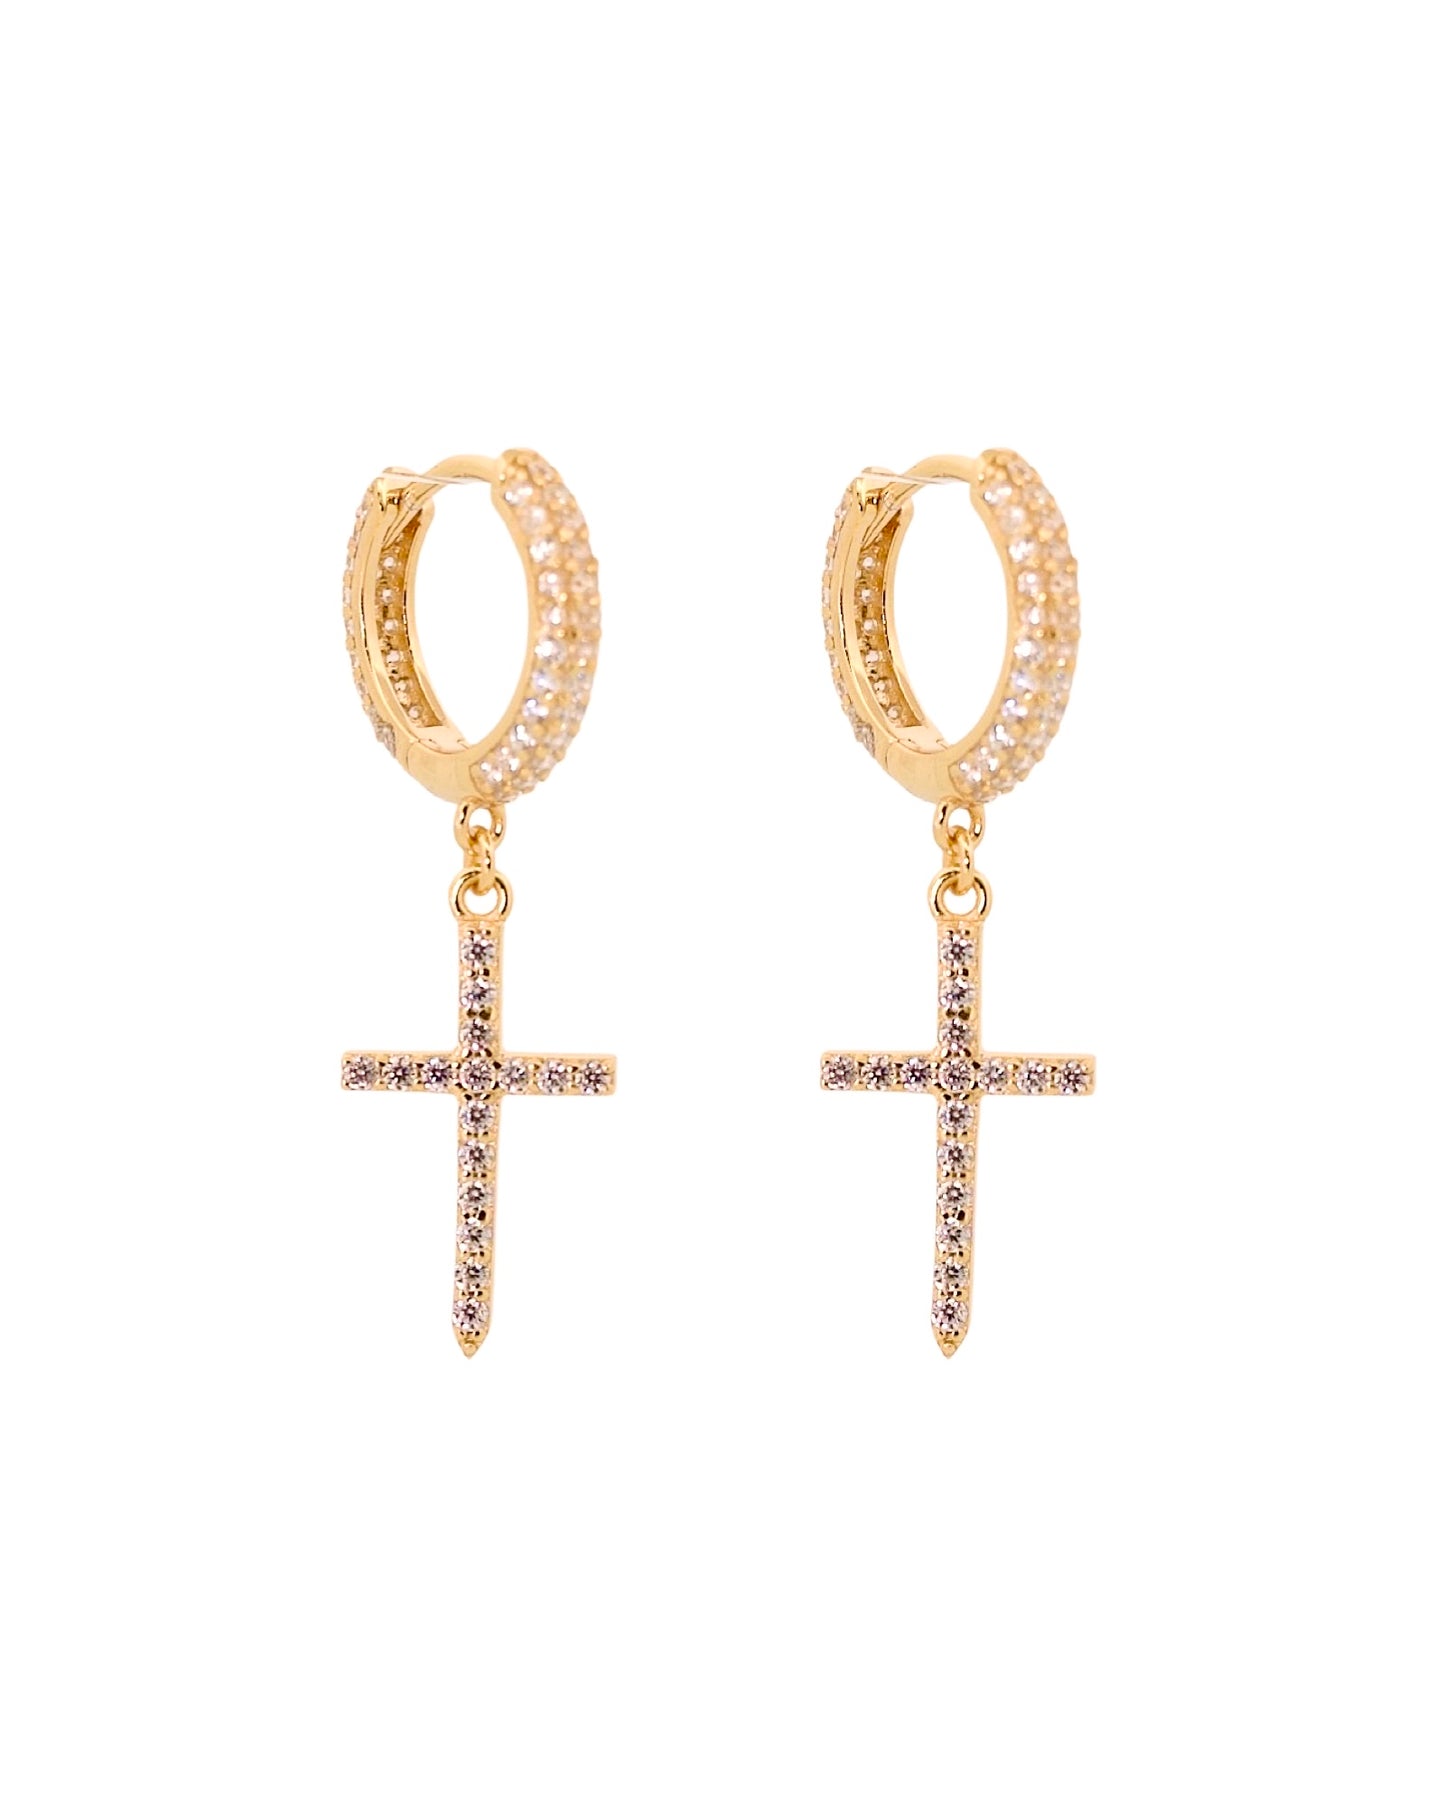 Iced Cross Earrings - Gold